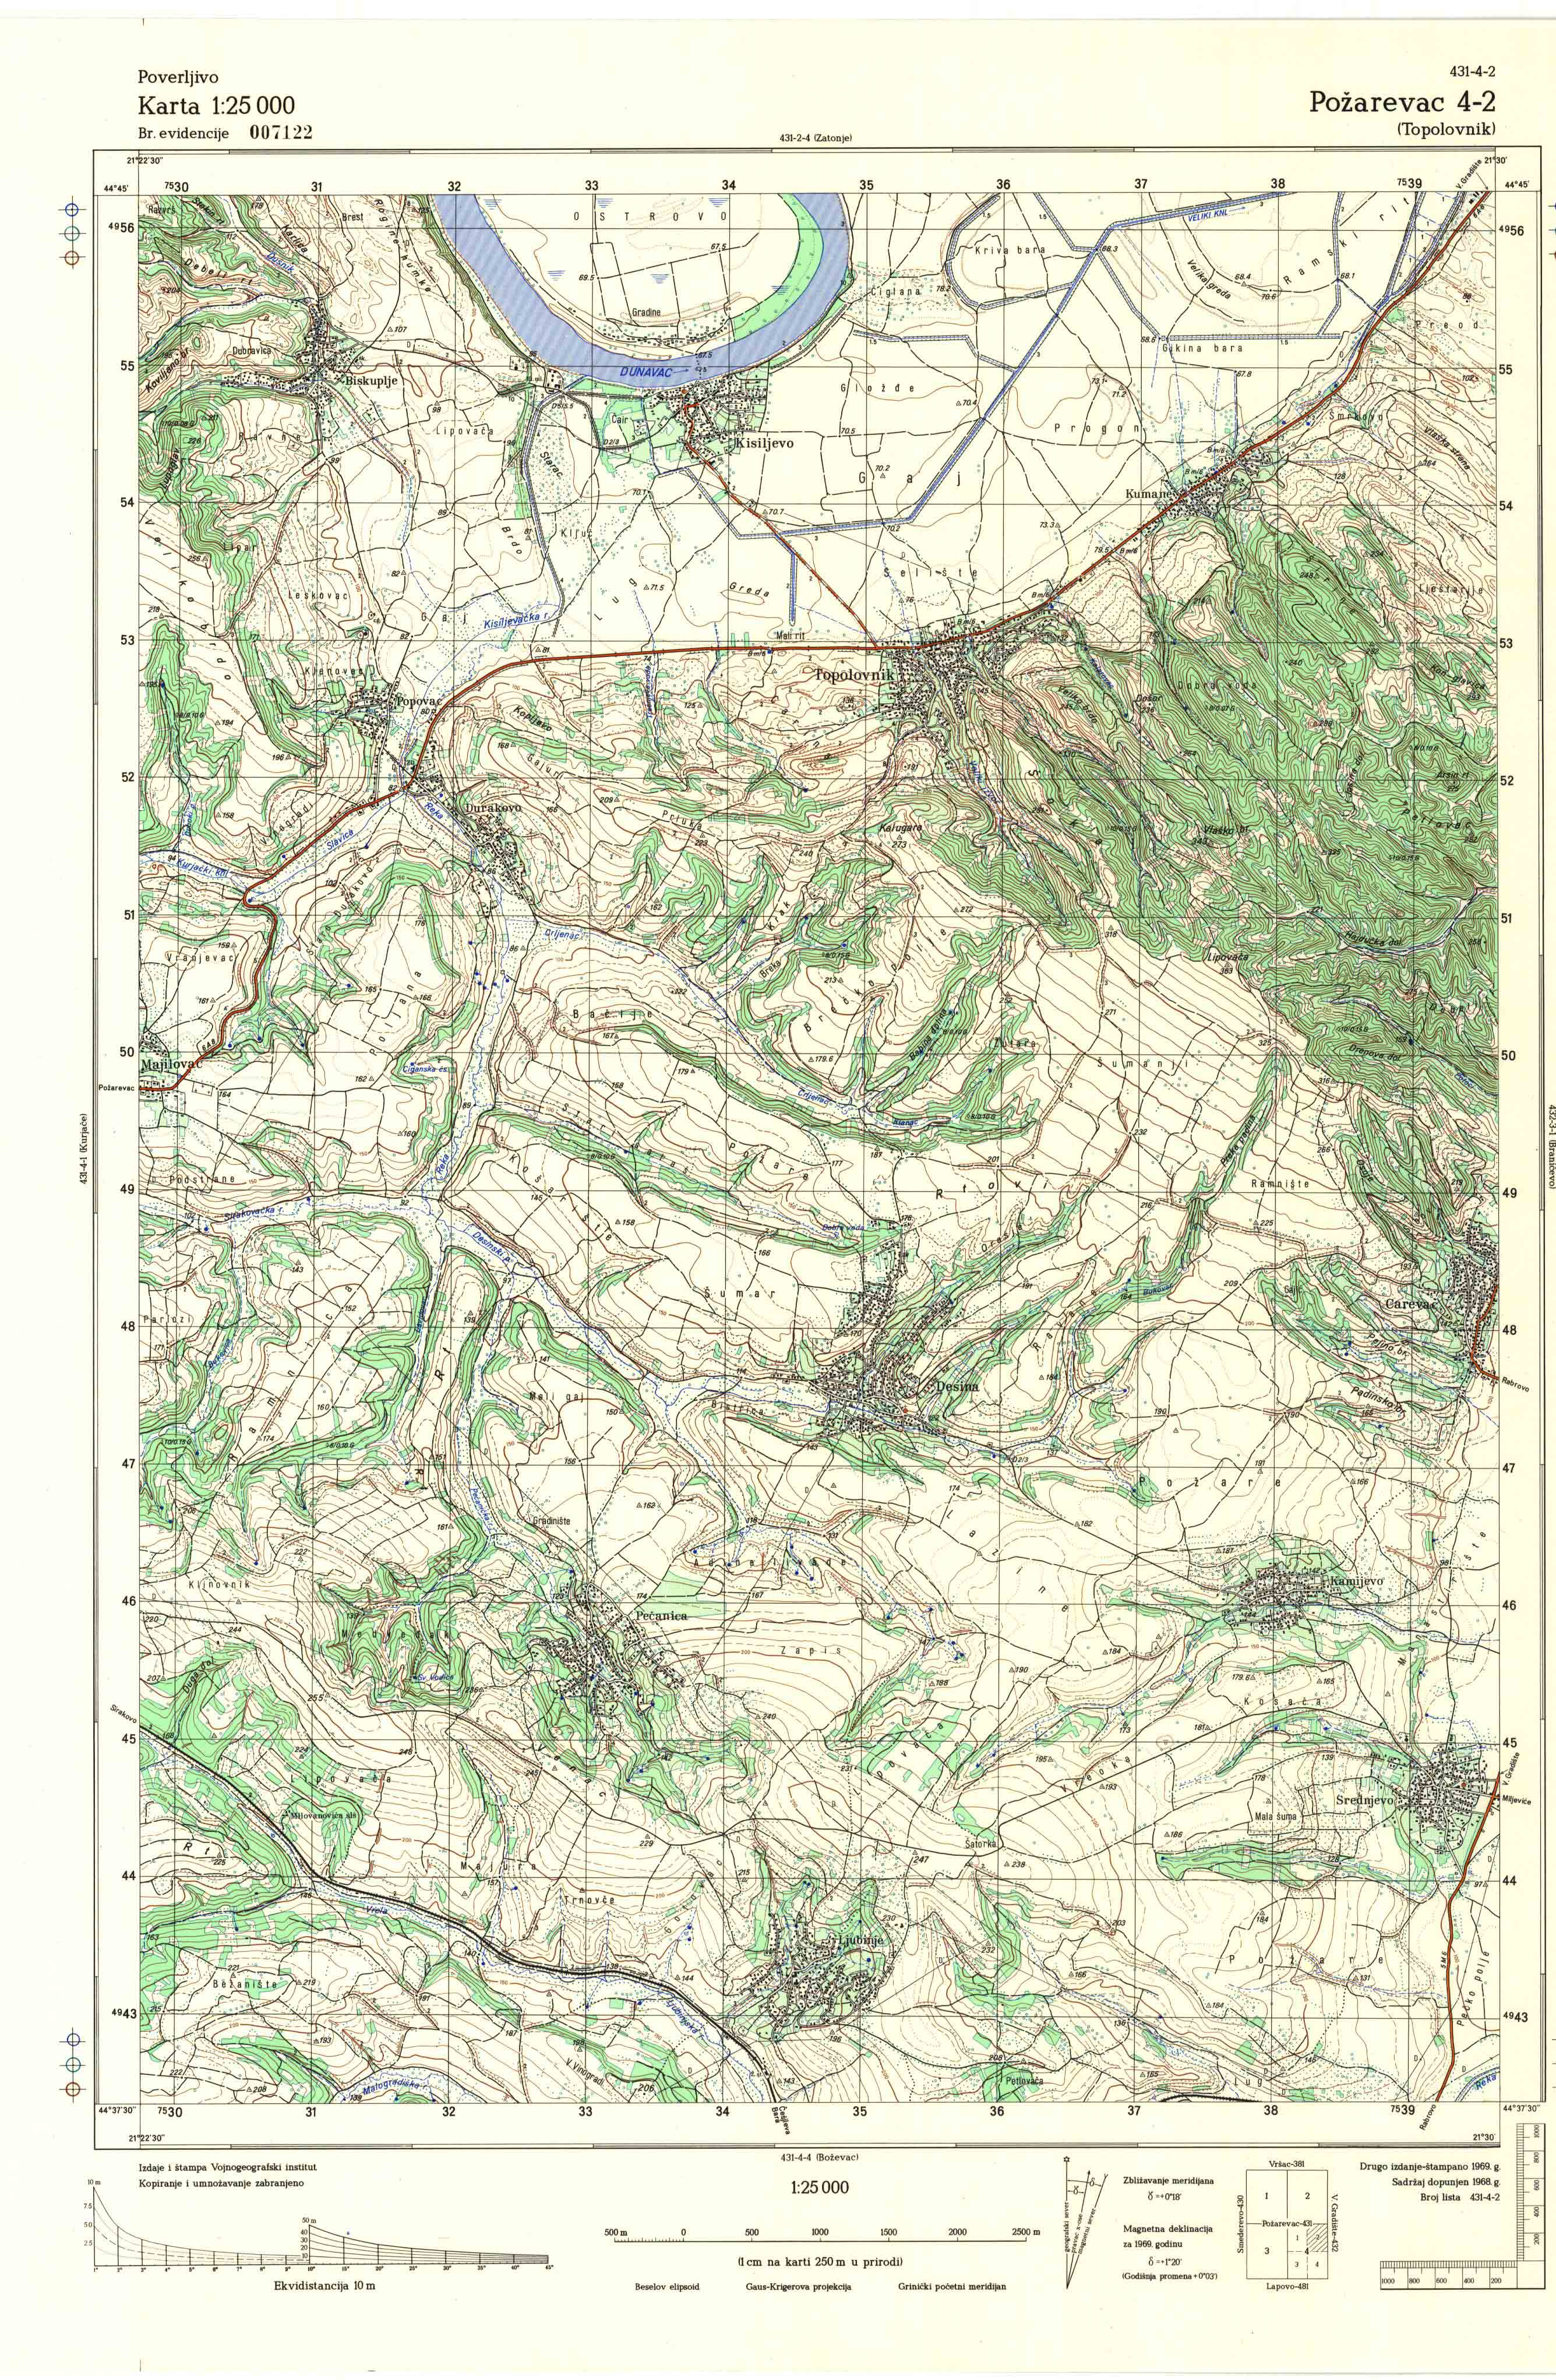  topografska karta srbije 25000 JNA  PoŽarevac